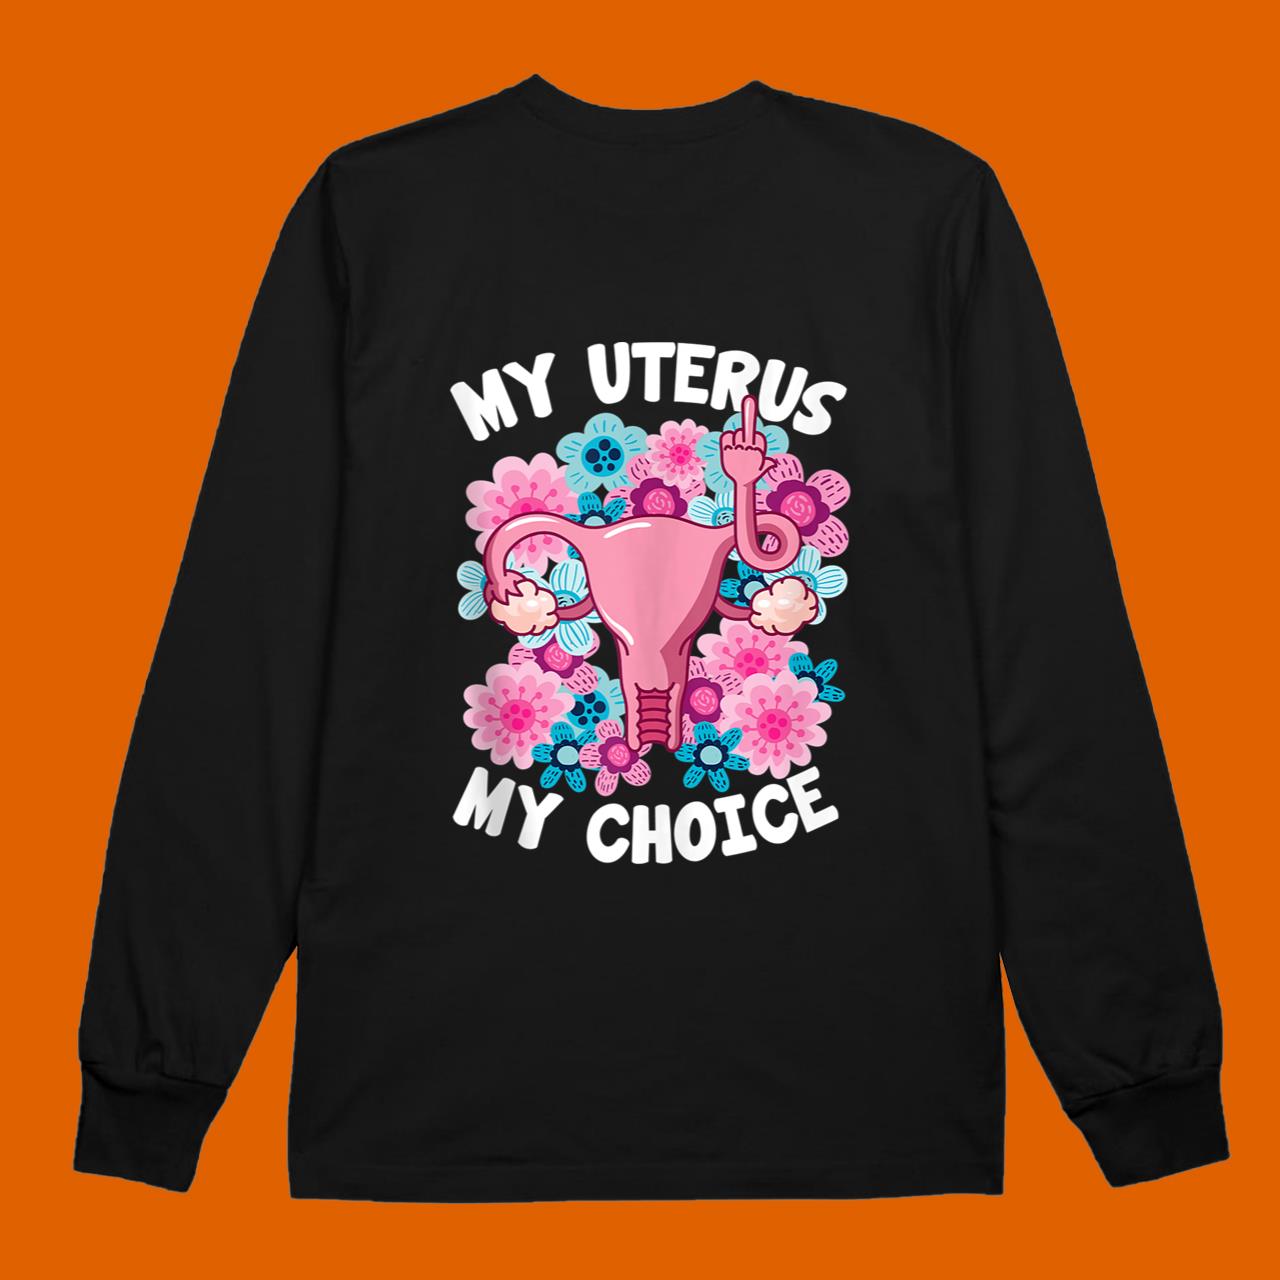 My Uterus My Choice Pro Choice Abortion Feminist Abortion Rights Shirts